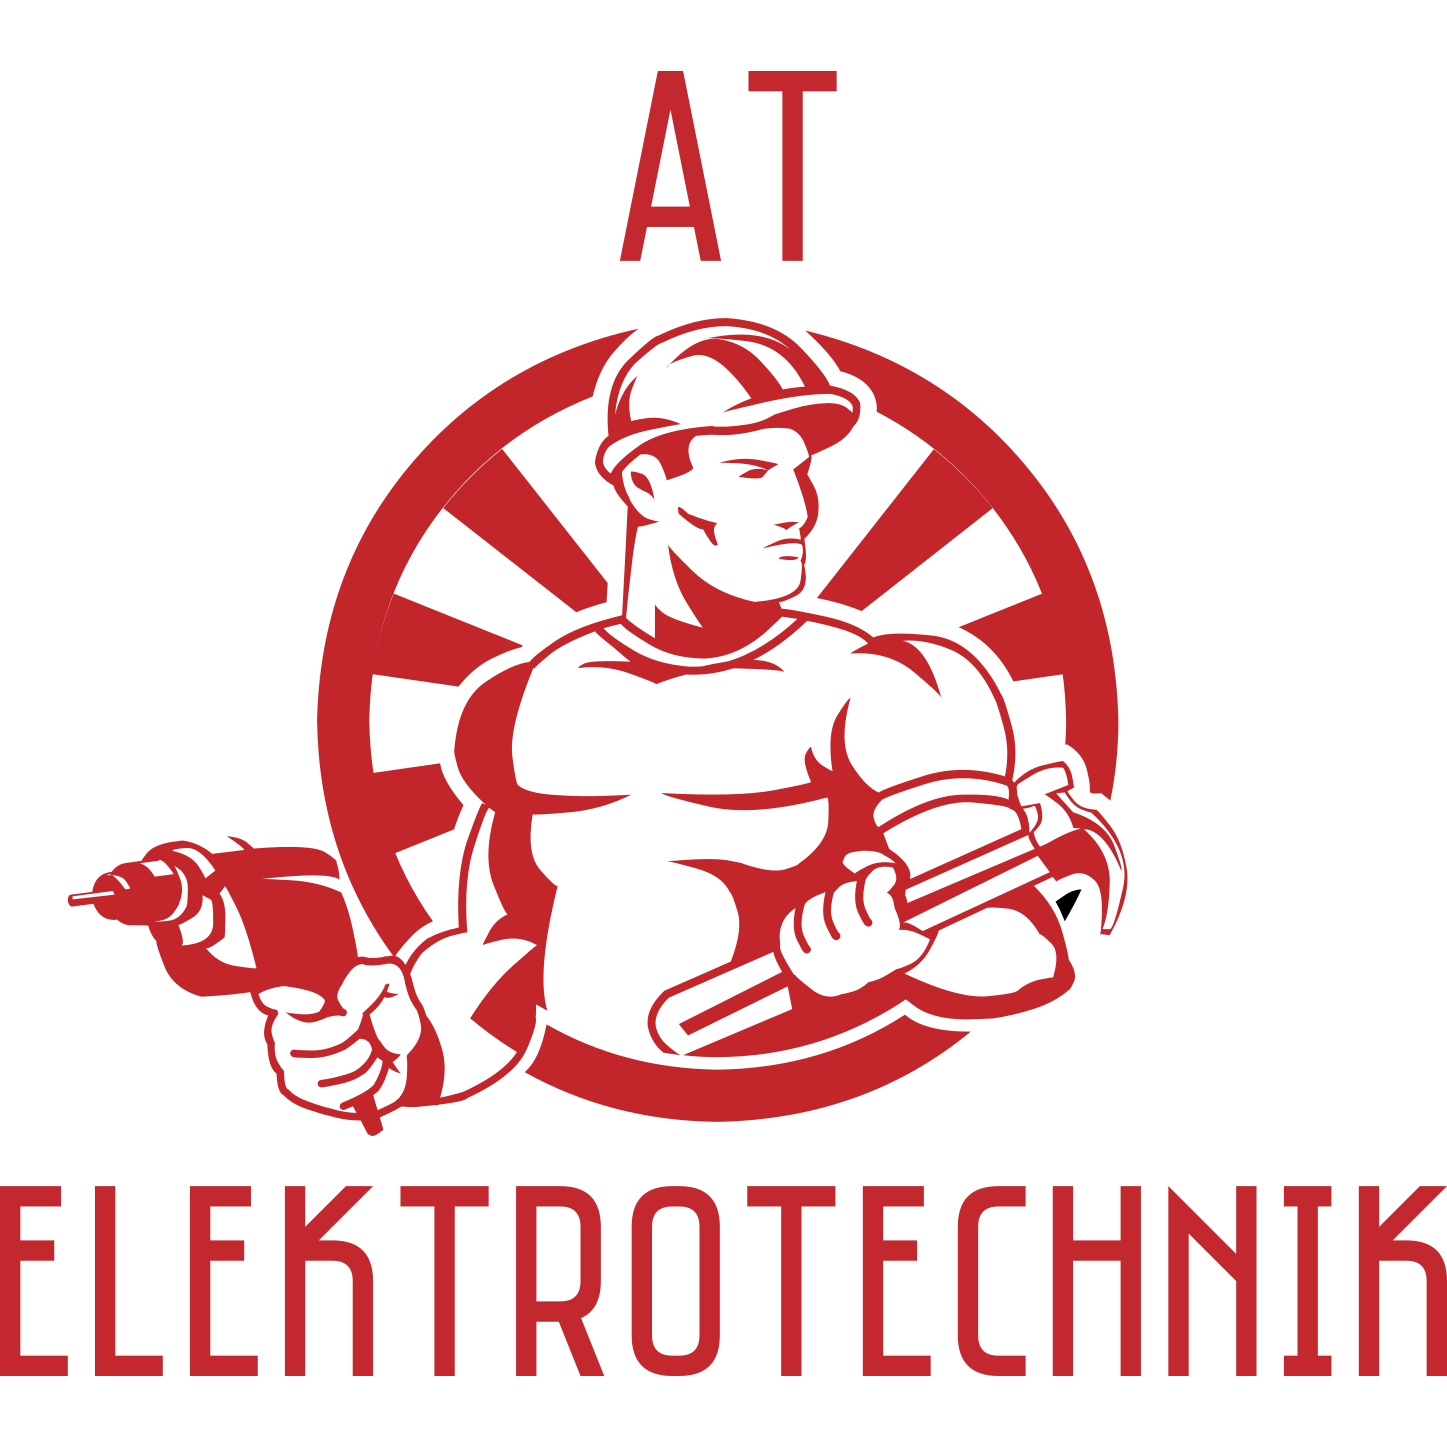 AT Elektrotechnik Logo